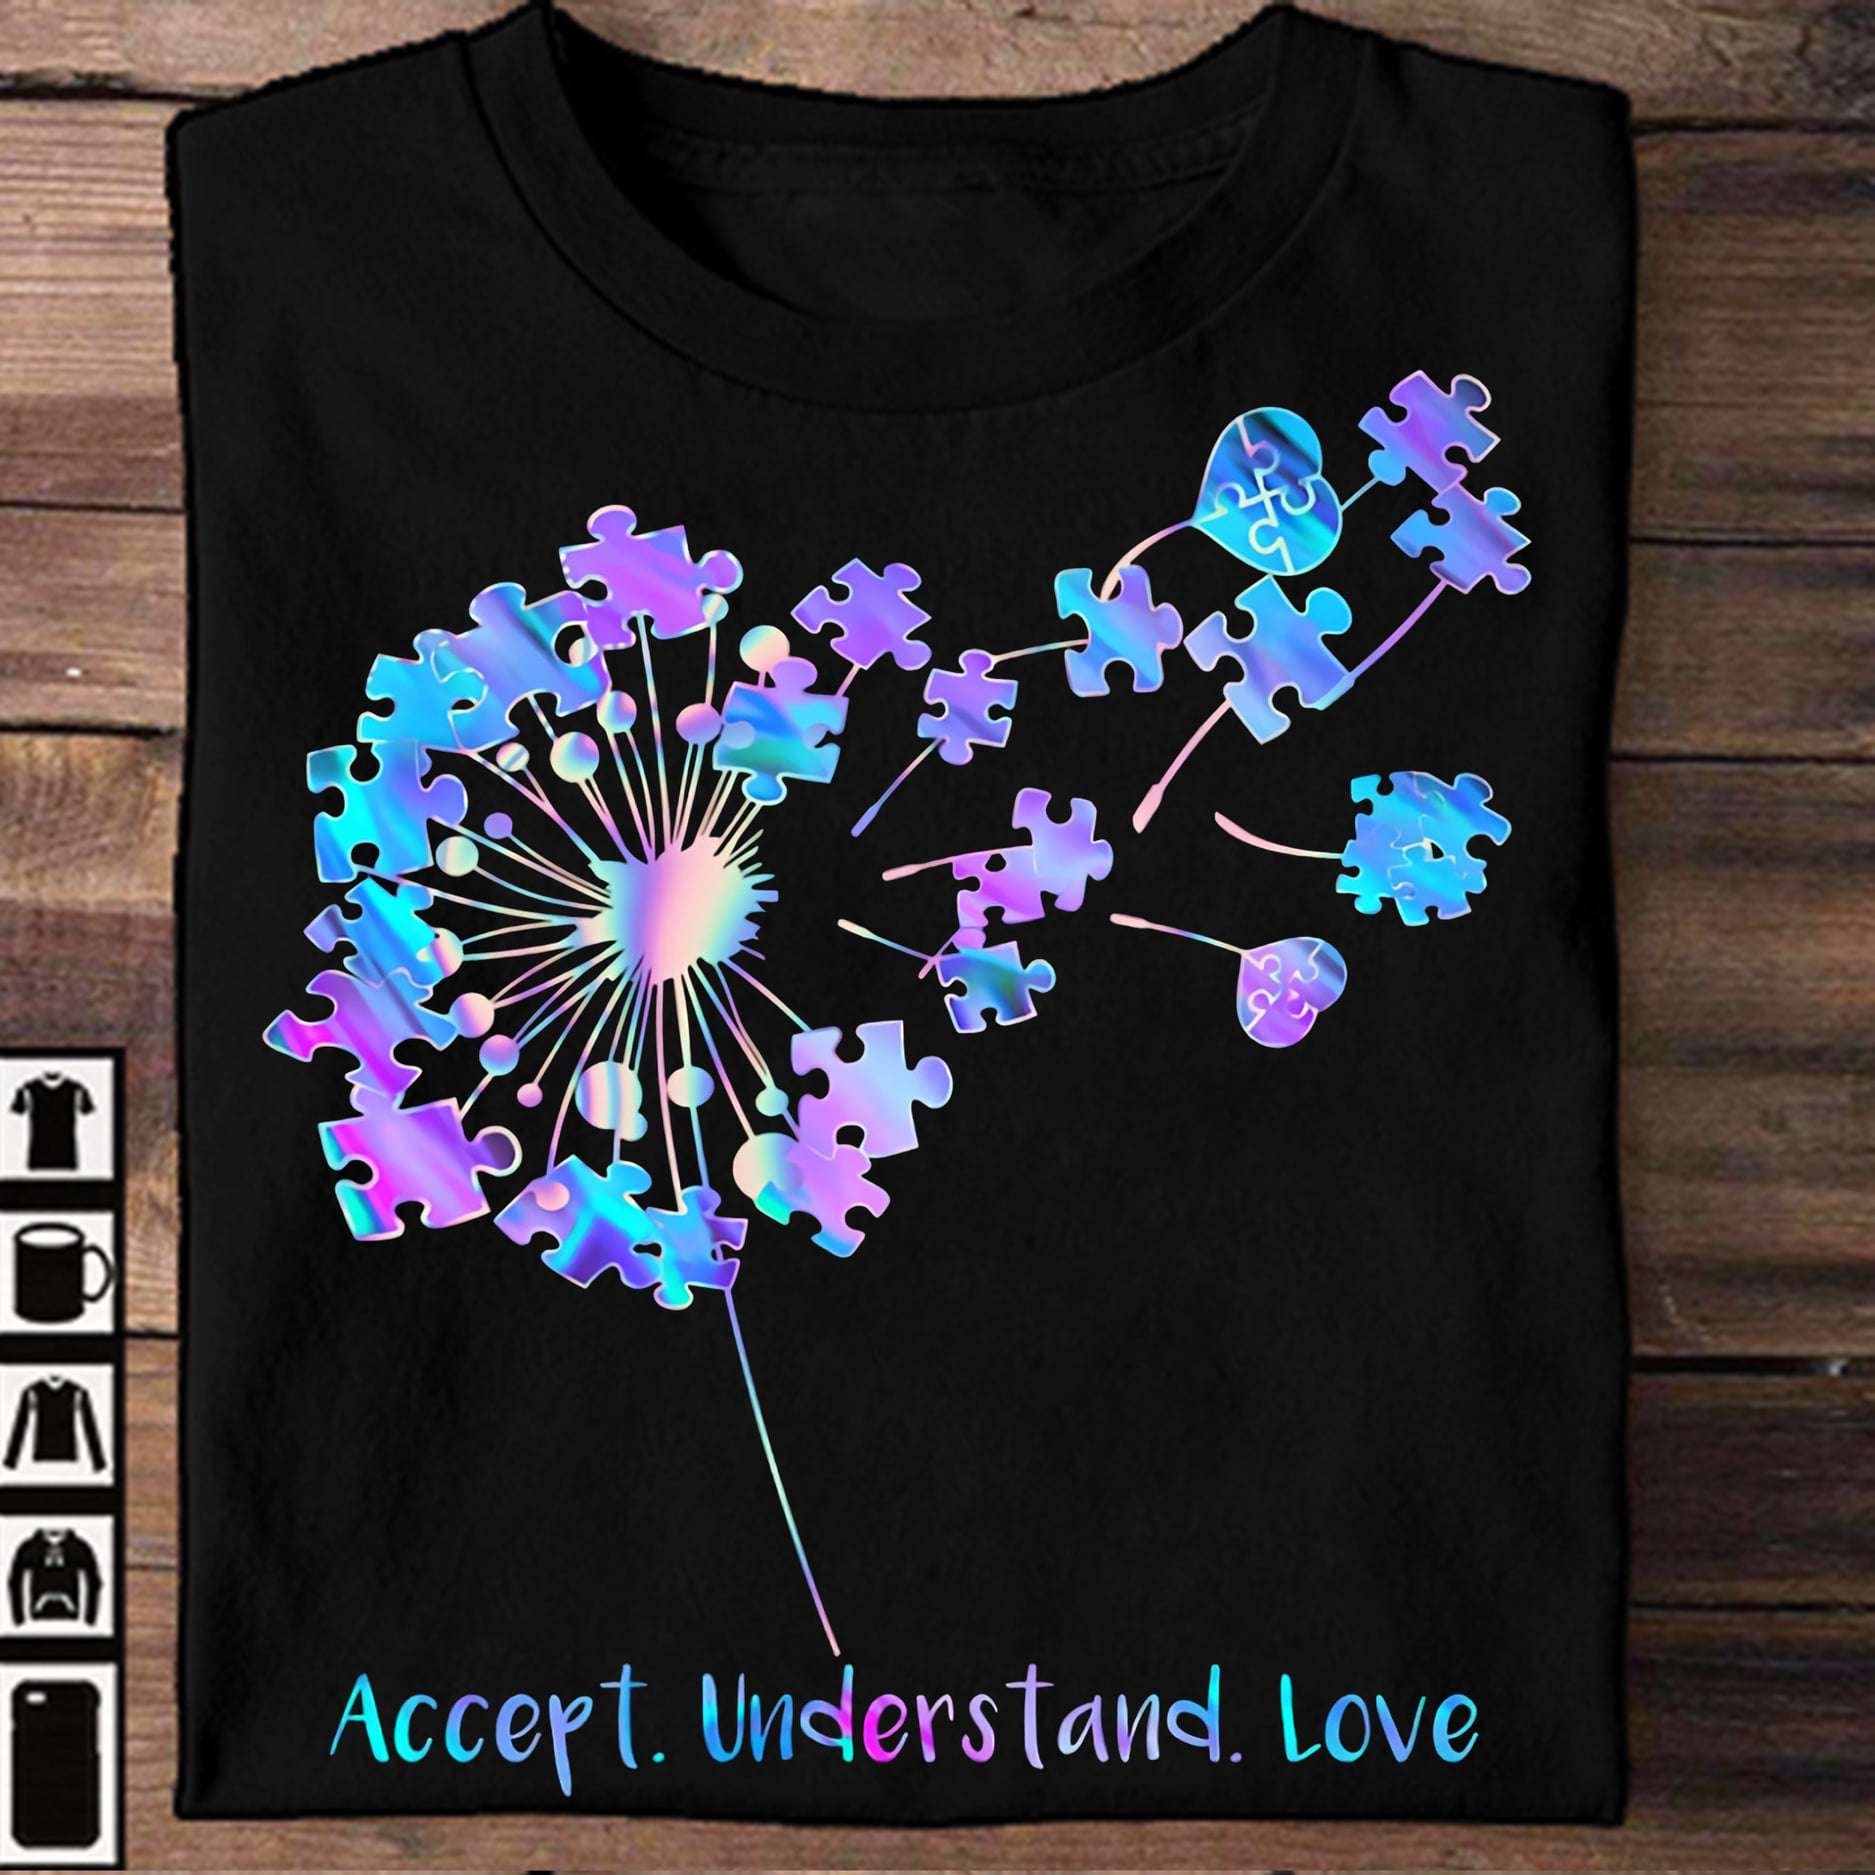 Accept understand love - Autism awareness, puzzle awareness symbol